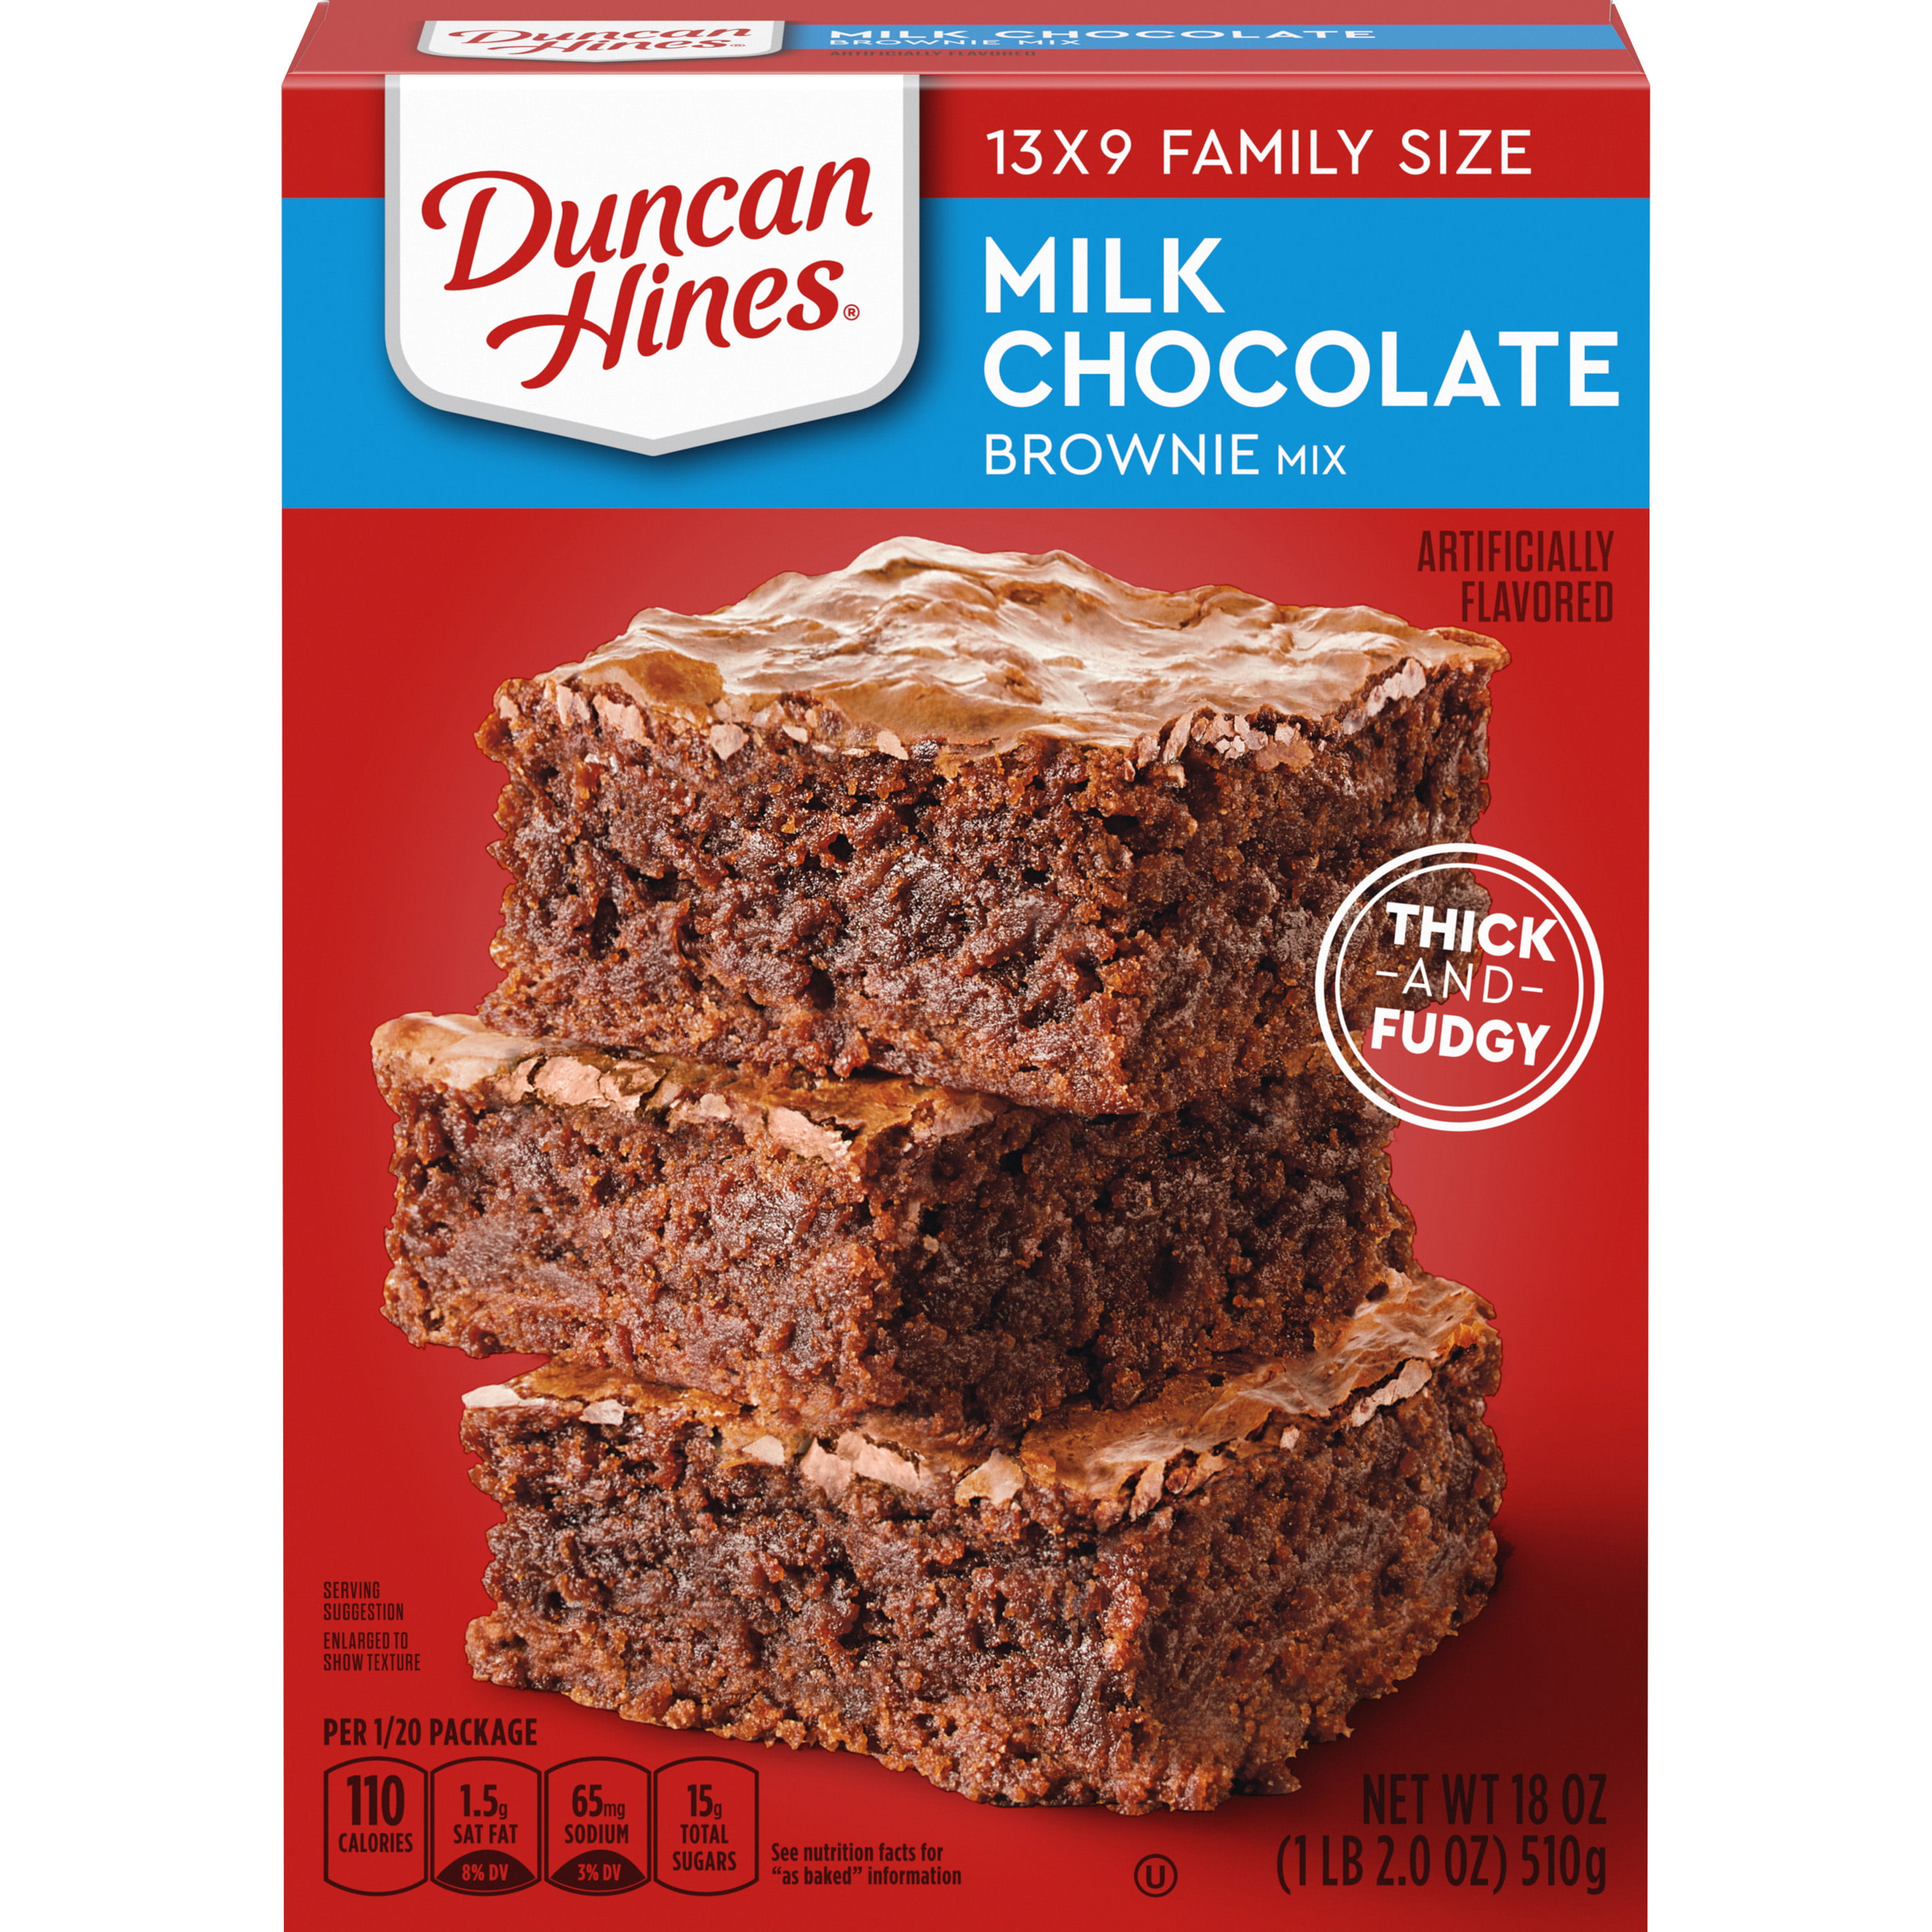 Ducan Hines Milk Chocolate Brownies 13 x 9 Family Size 18 oz Box ...